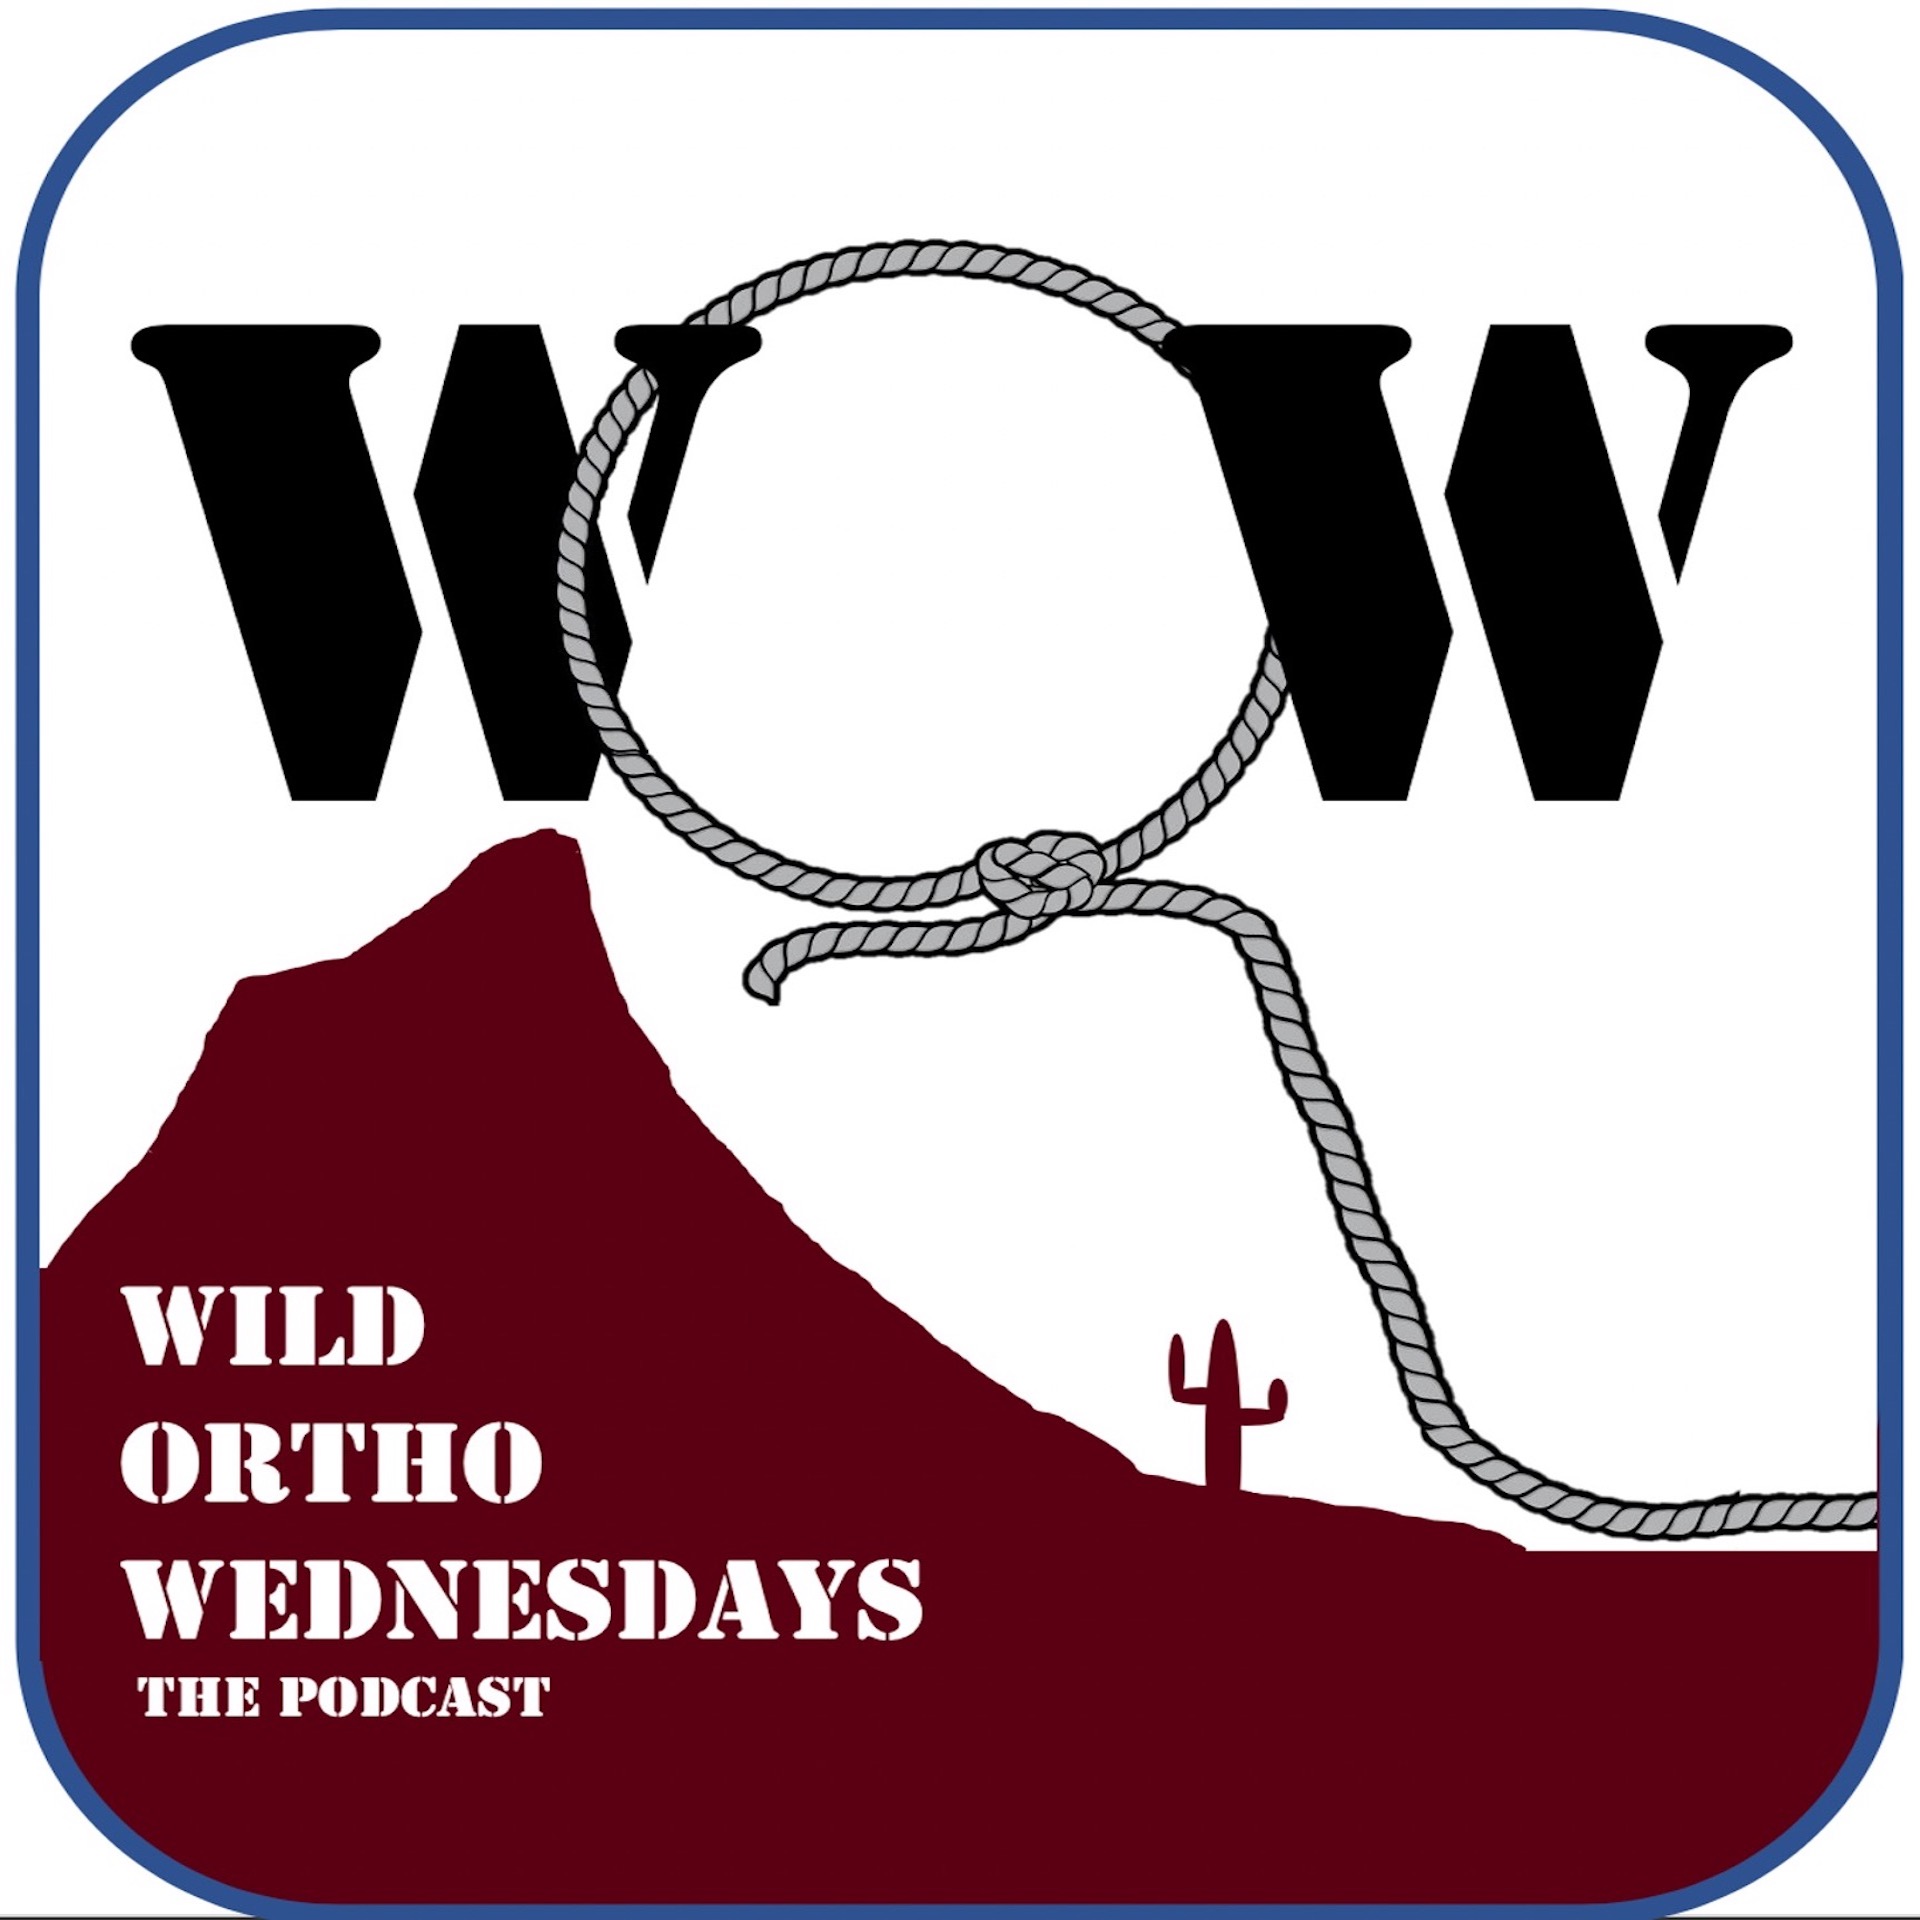 Wild Ortho Wednesdays: The Podcast